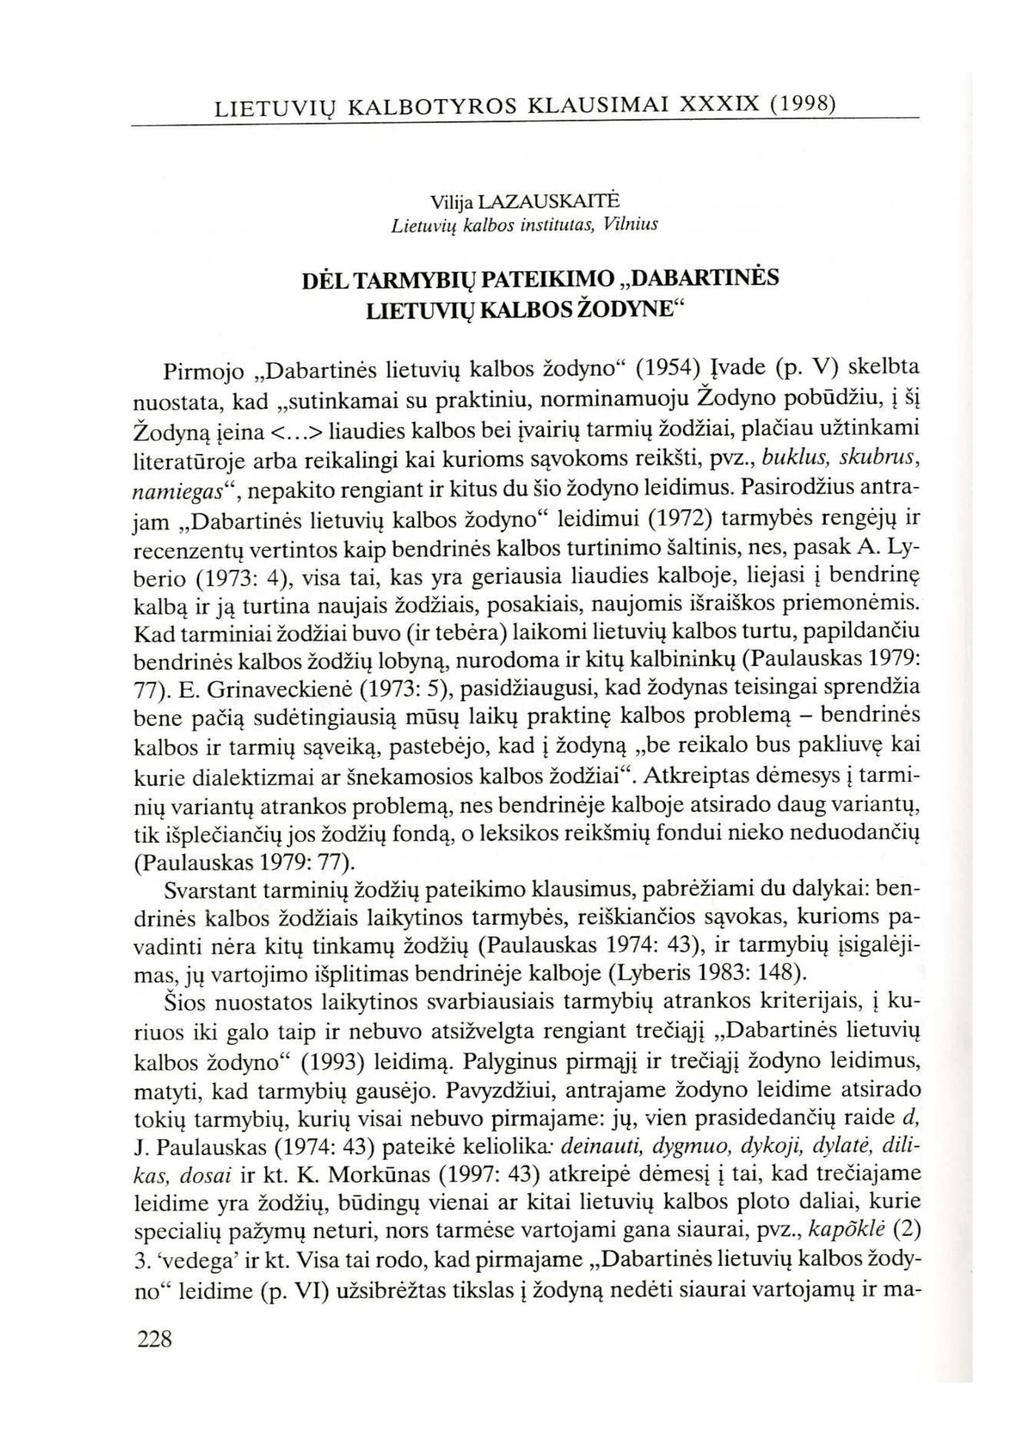 LIETUVIU KALBOTYROS KLAUSIMAI XXXIX (1998) Vilija LAZAUSKAITE Lietuviy kalbos institutas, Vilnius DEL TARMYBIU PATEIKIMO,,DABARTINES LIETUVIU KALBOS ZODYNE Pirmojo,,Dabartinés lietuviy kalbos zodyno